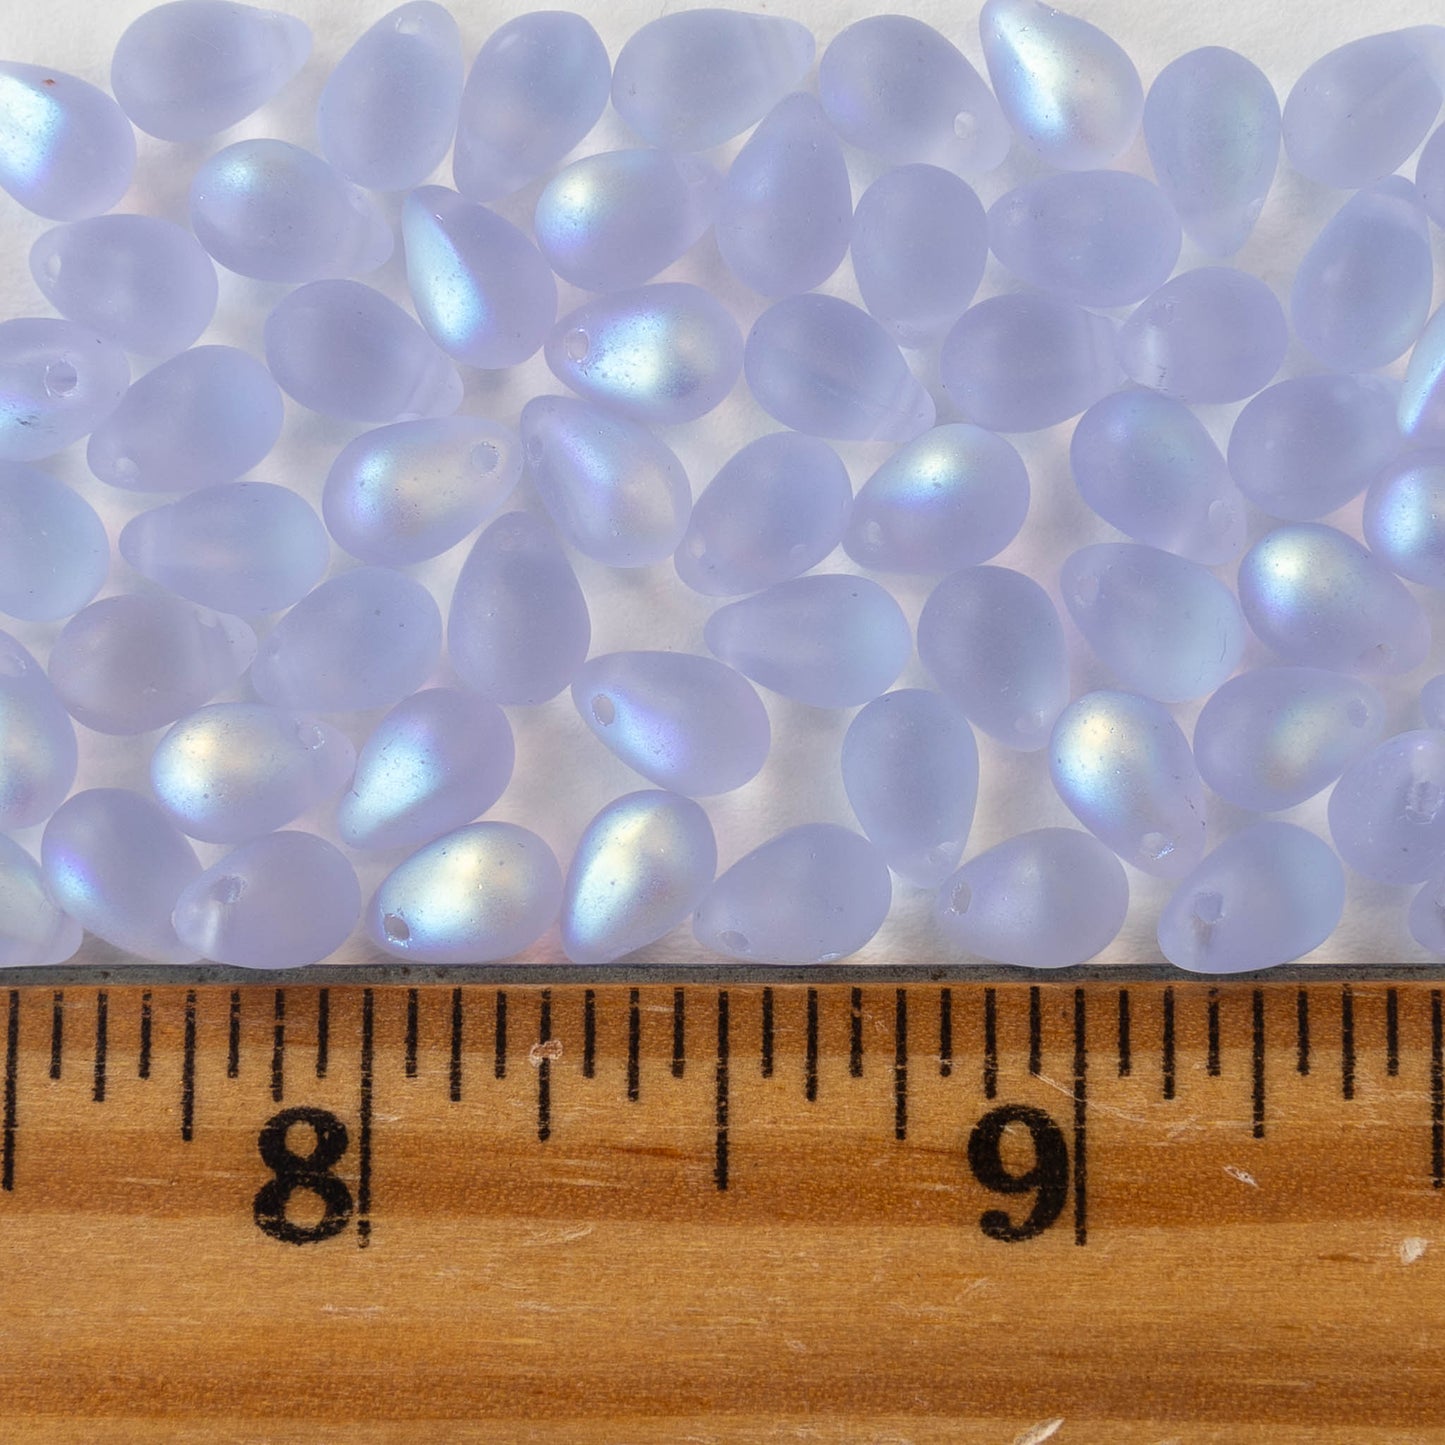 5x7mm Glass Teardrop Beads - Lavender Matte AB - 75 Beads